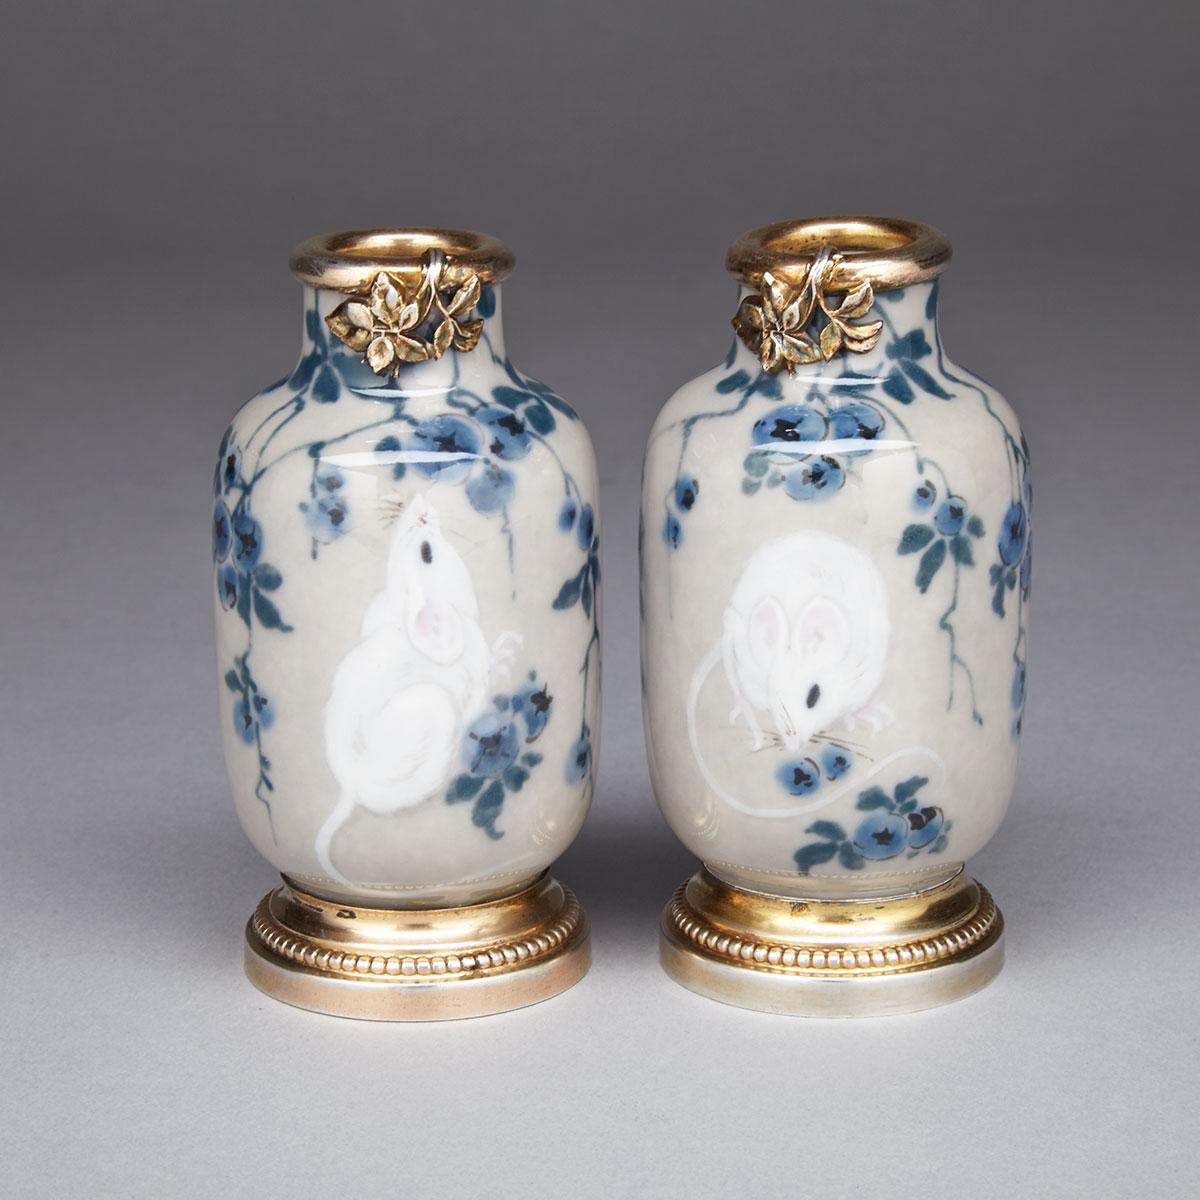 Pair of Silver-Gilt Mounted Charles Serpaut, Limoges Pâte-sur-Pâte Cabinet Vases, 1920s